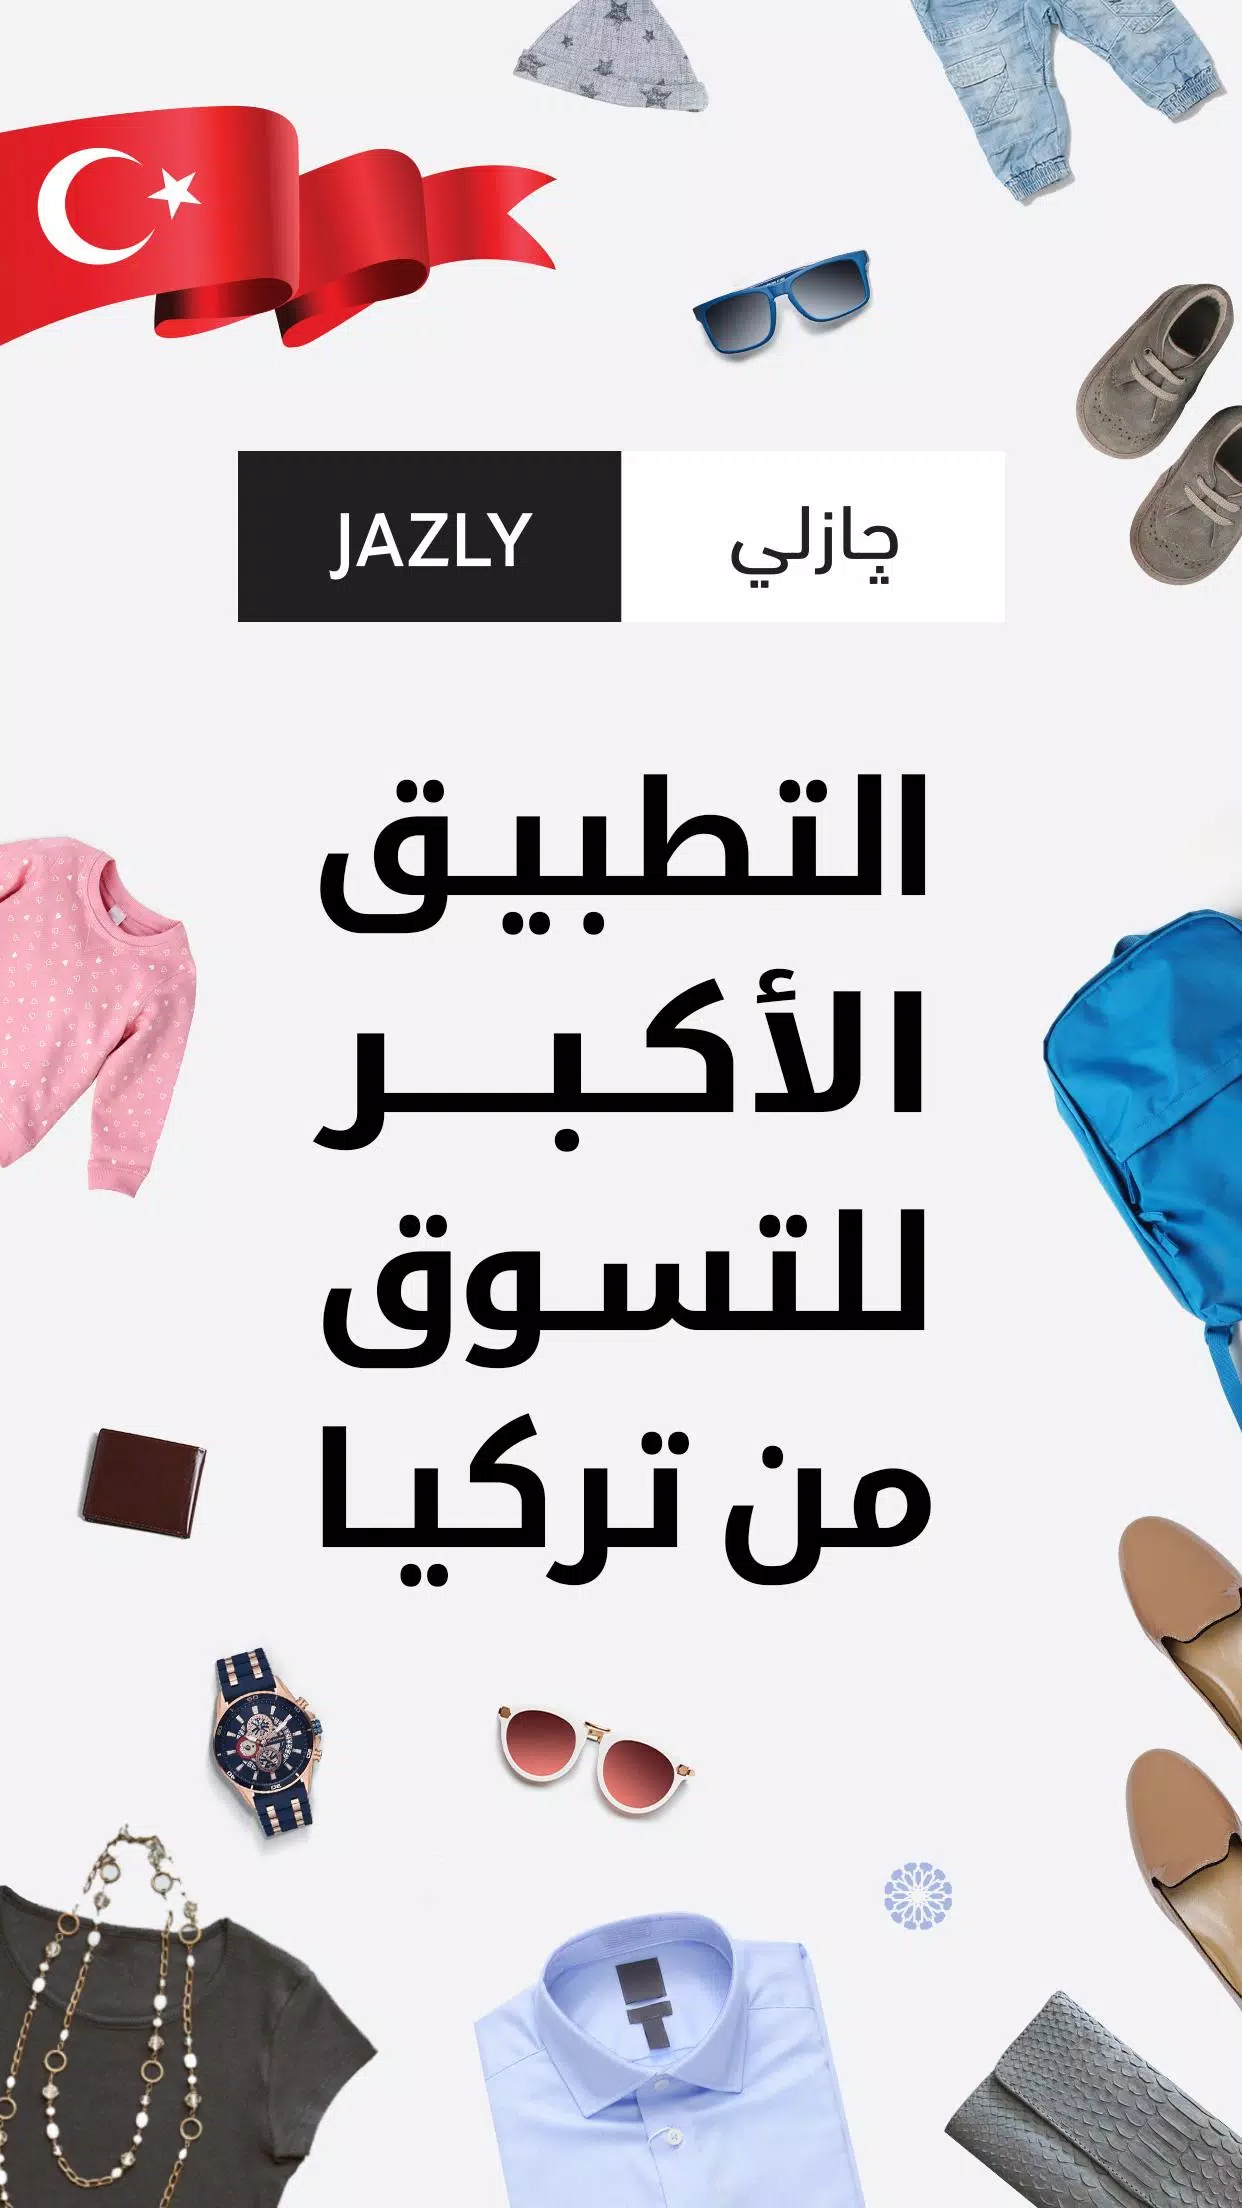 Jazly Fashion - جازلي للأزياء APK for Android Download